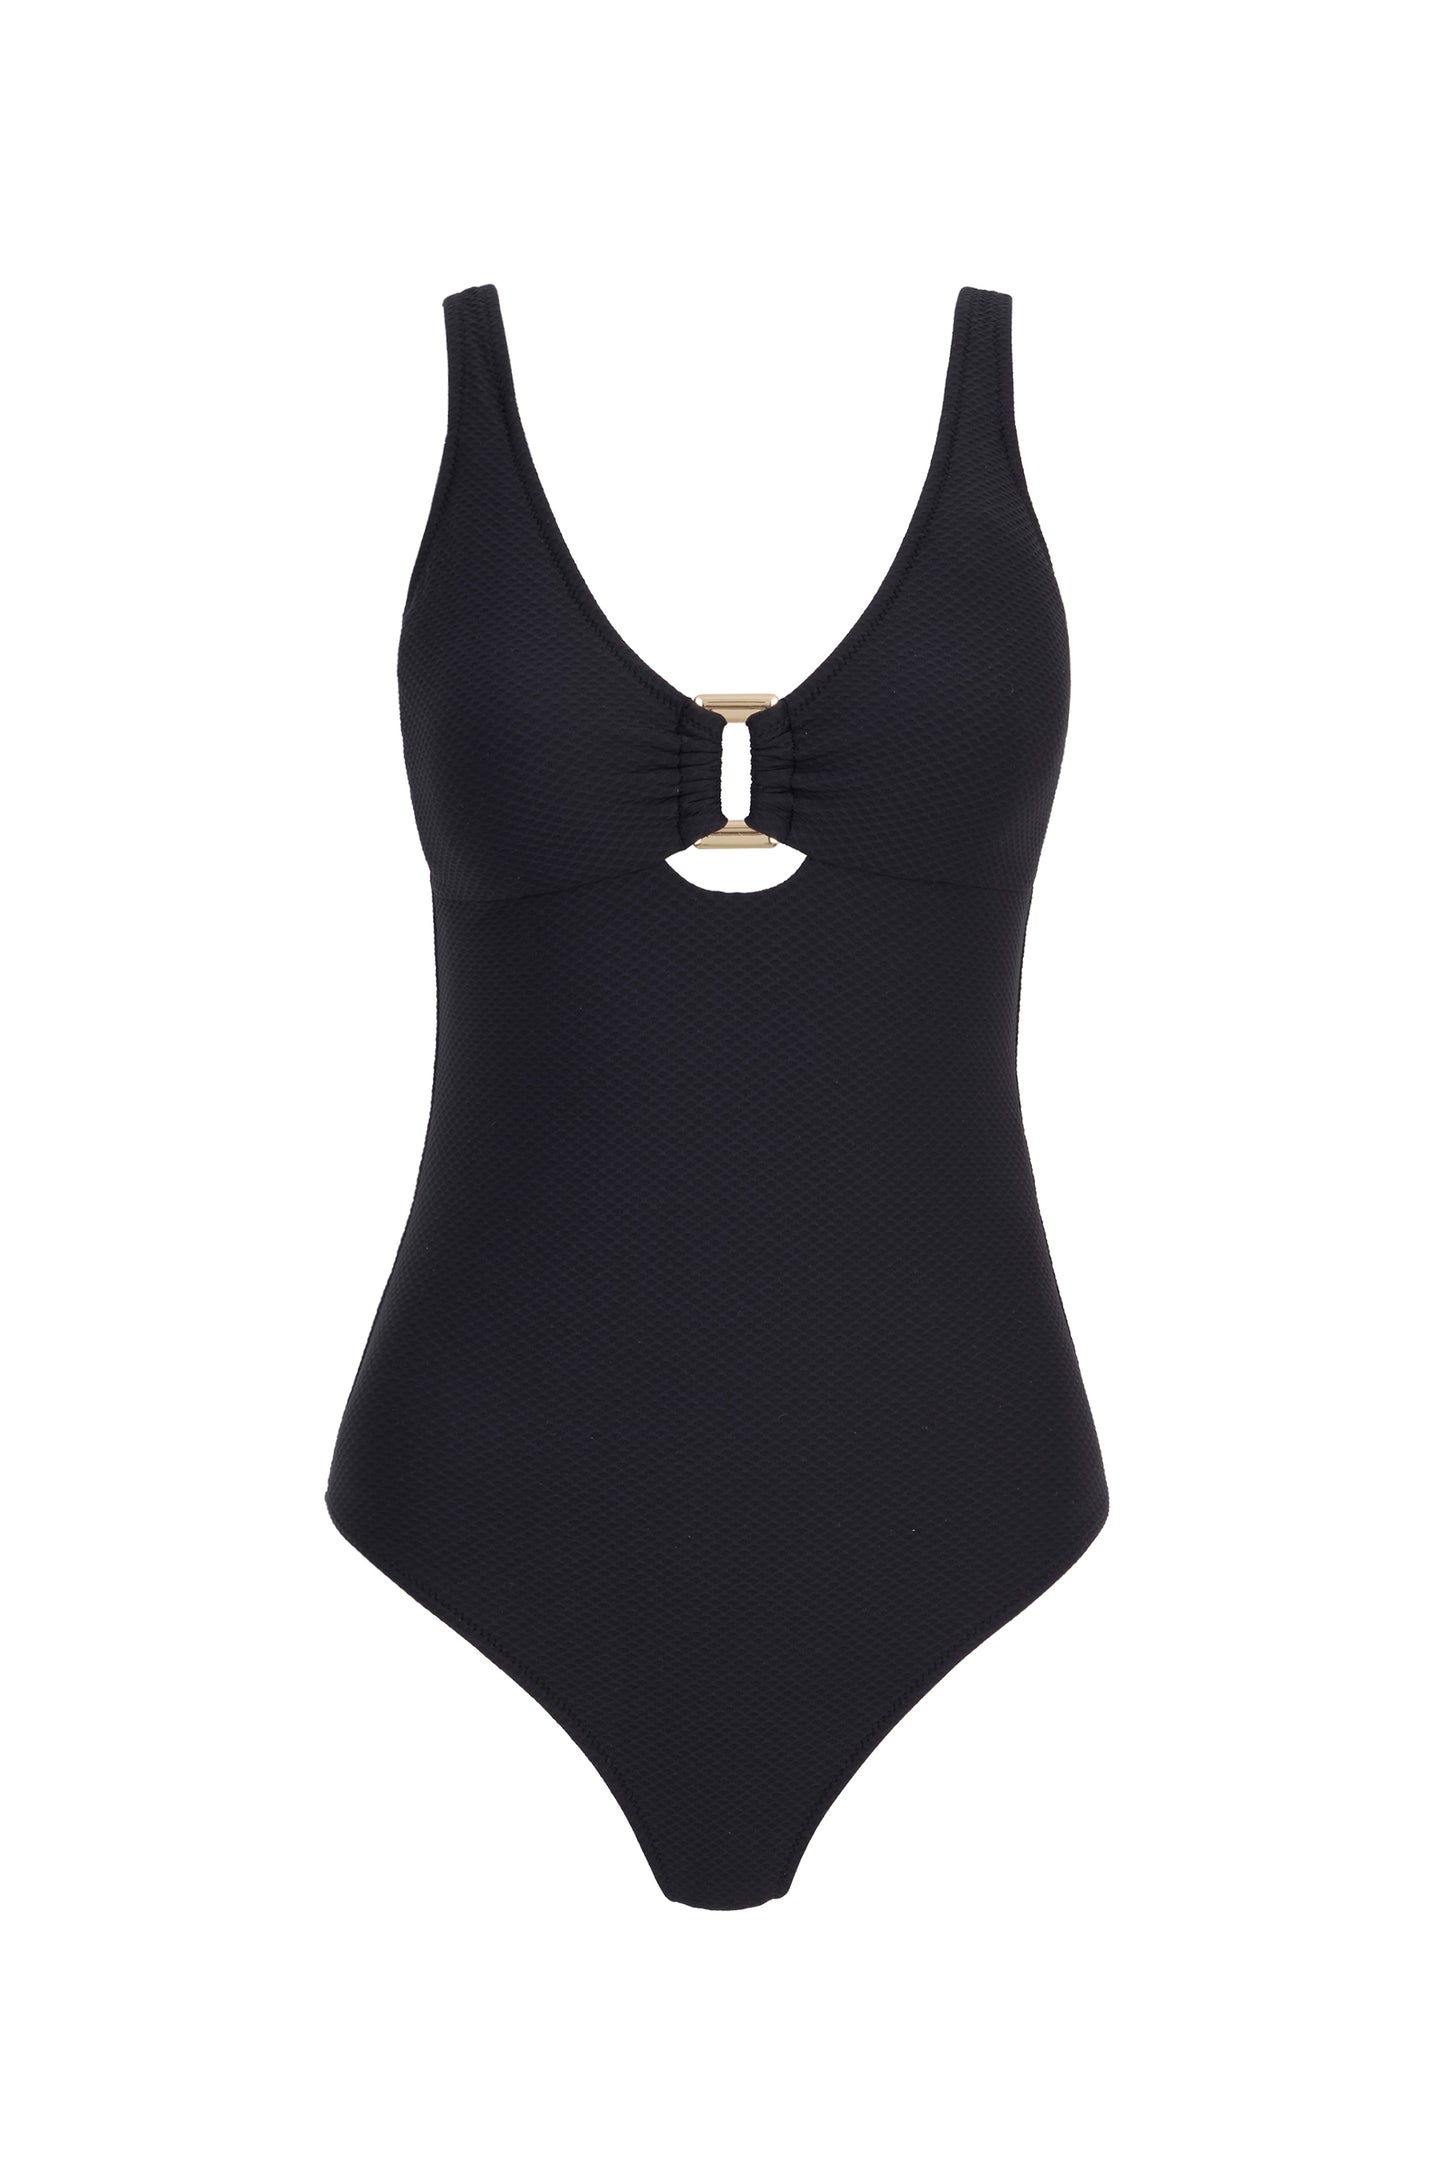 Black Rectangle Swimsuit